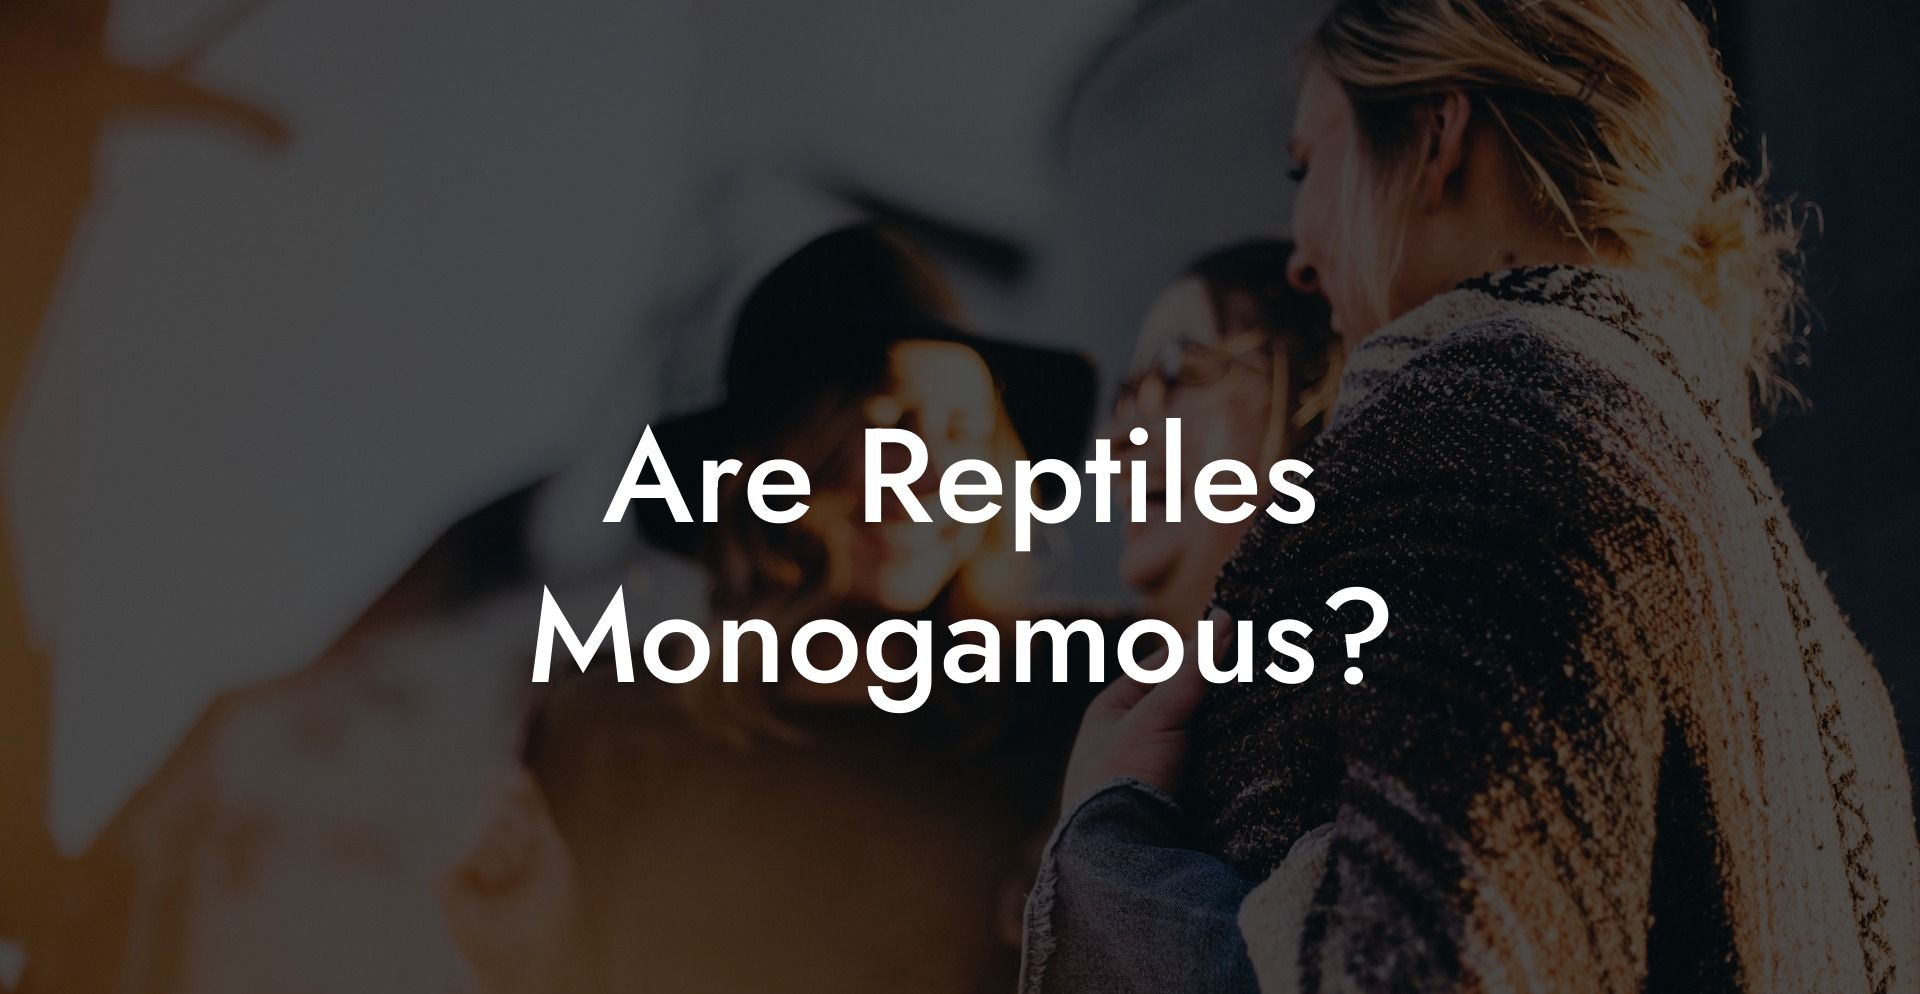 Are Reptiles Monogamous?